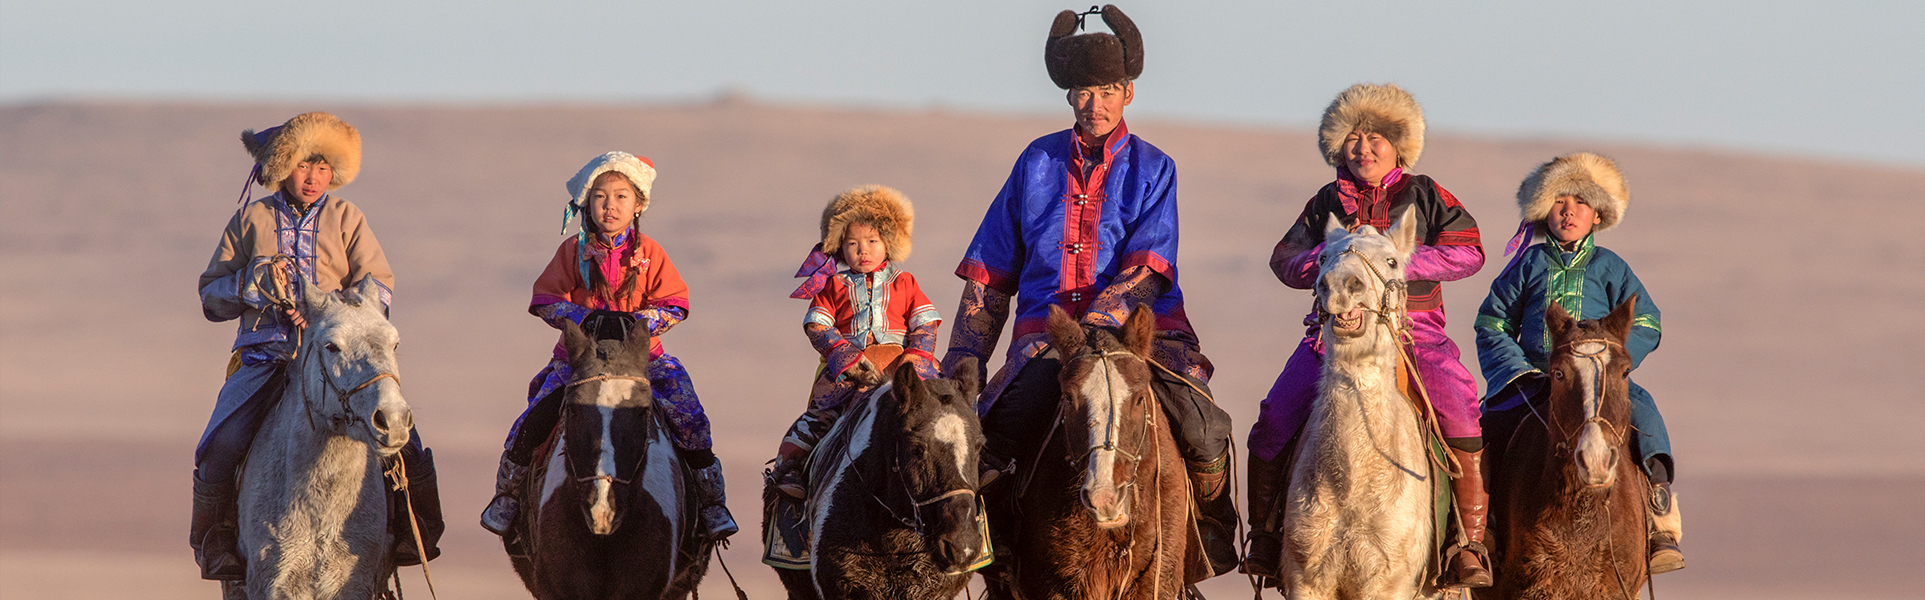 winter-horse-festival-photo-tour-mongolia-ayan-travel